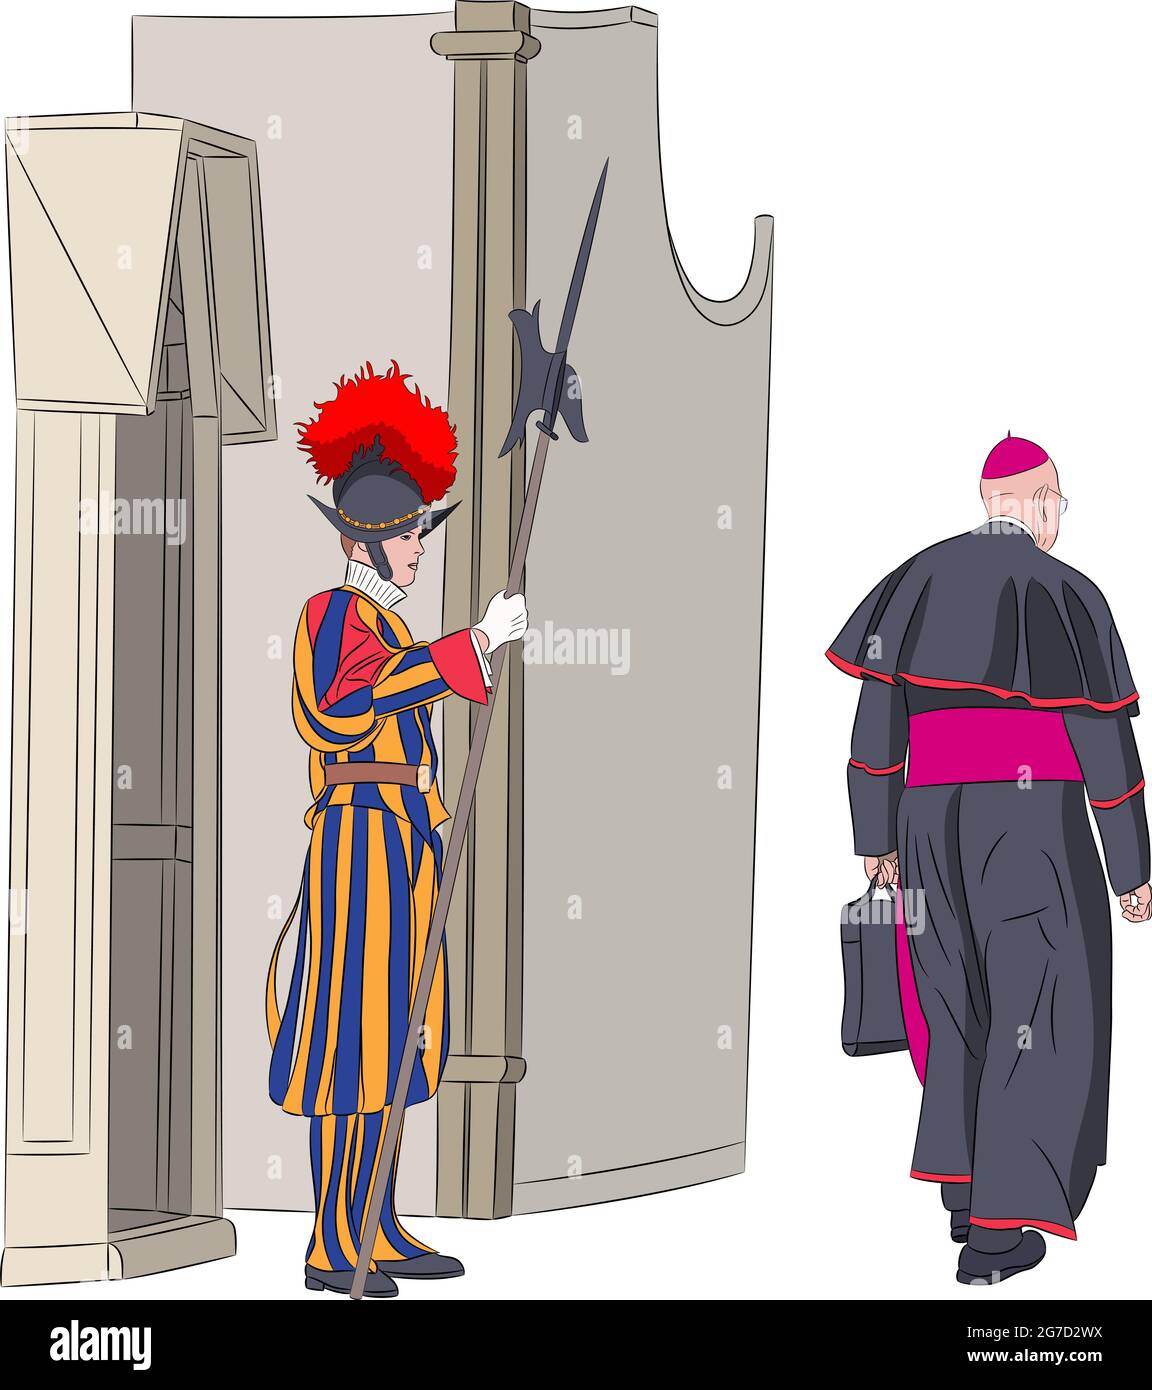 Swiss guardsman in a ceremonial multicolored uniform guarding the Vatican. Stock Vector